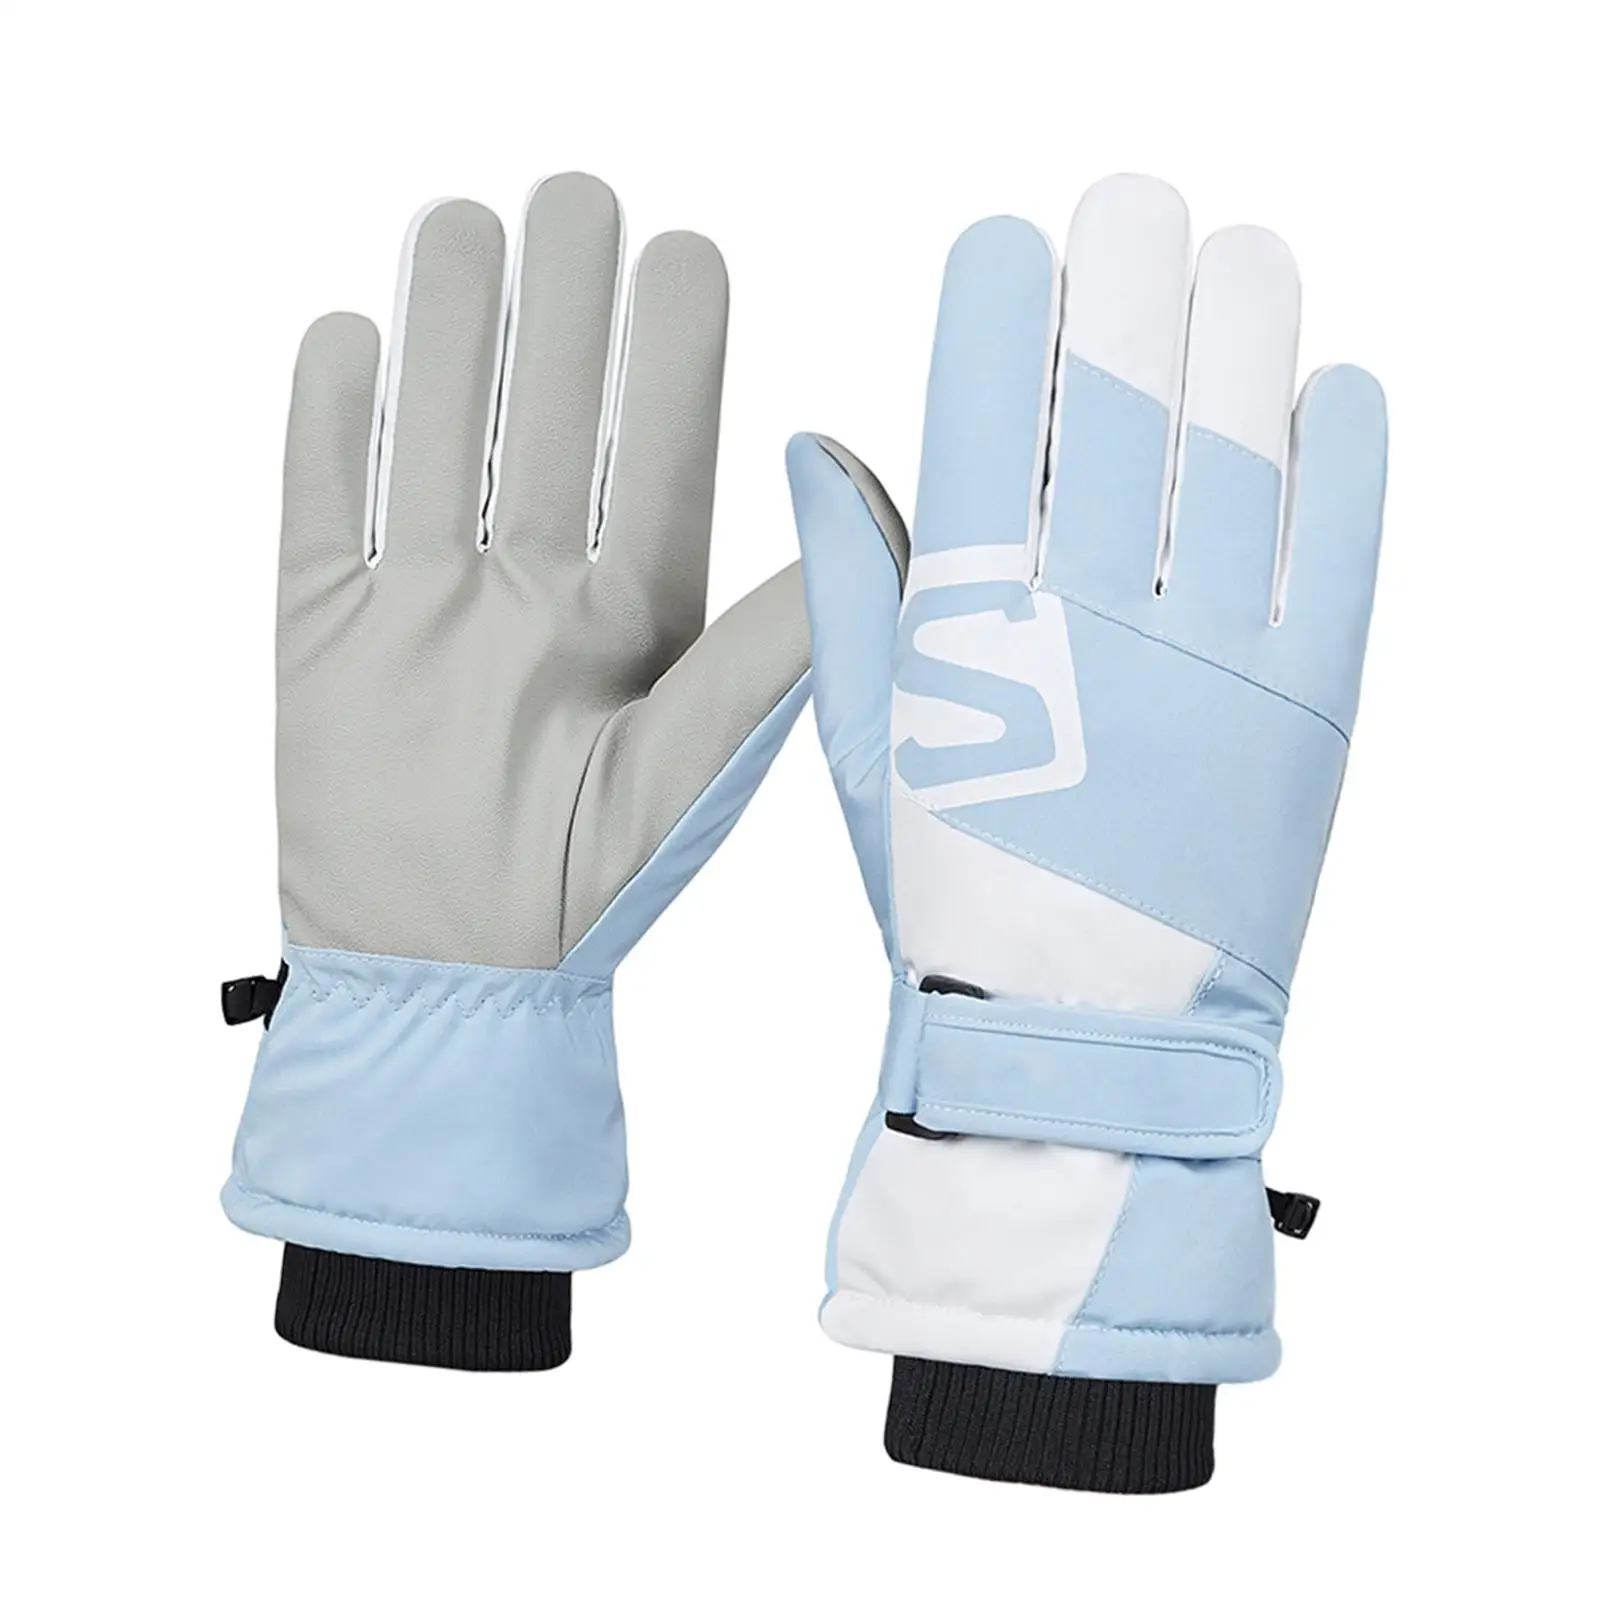 Winter Ski Gloves Snow Ski Gloves, Touchscreen Mittens Gift Warm Mittens Thickened Gloves, for Snow Driving Outdoor Biking